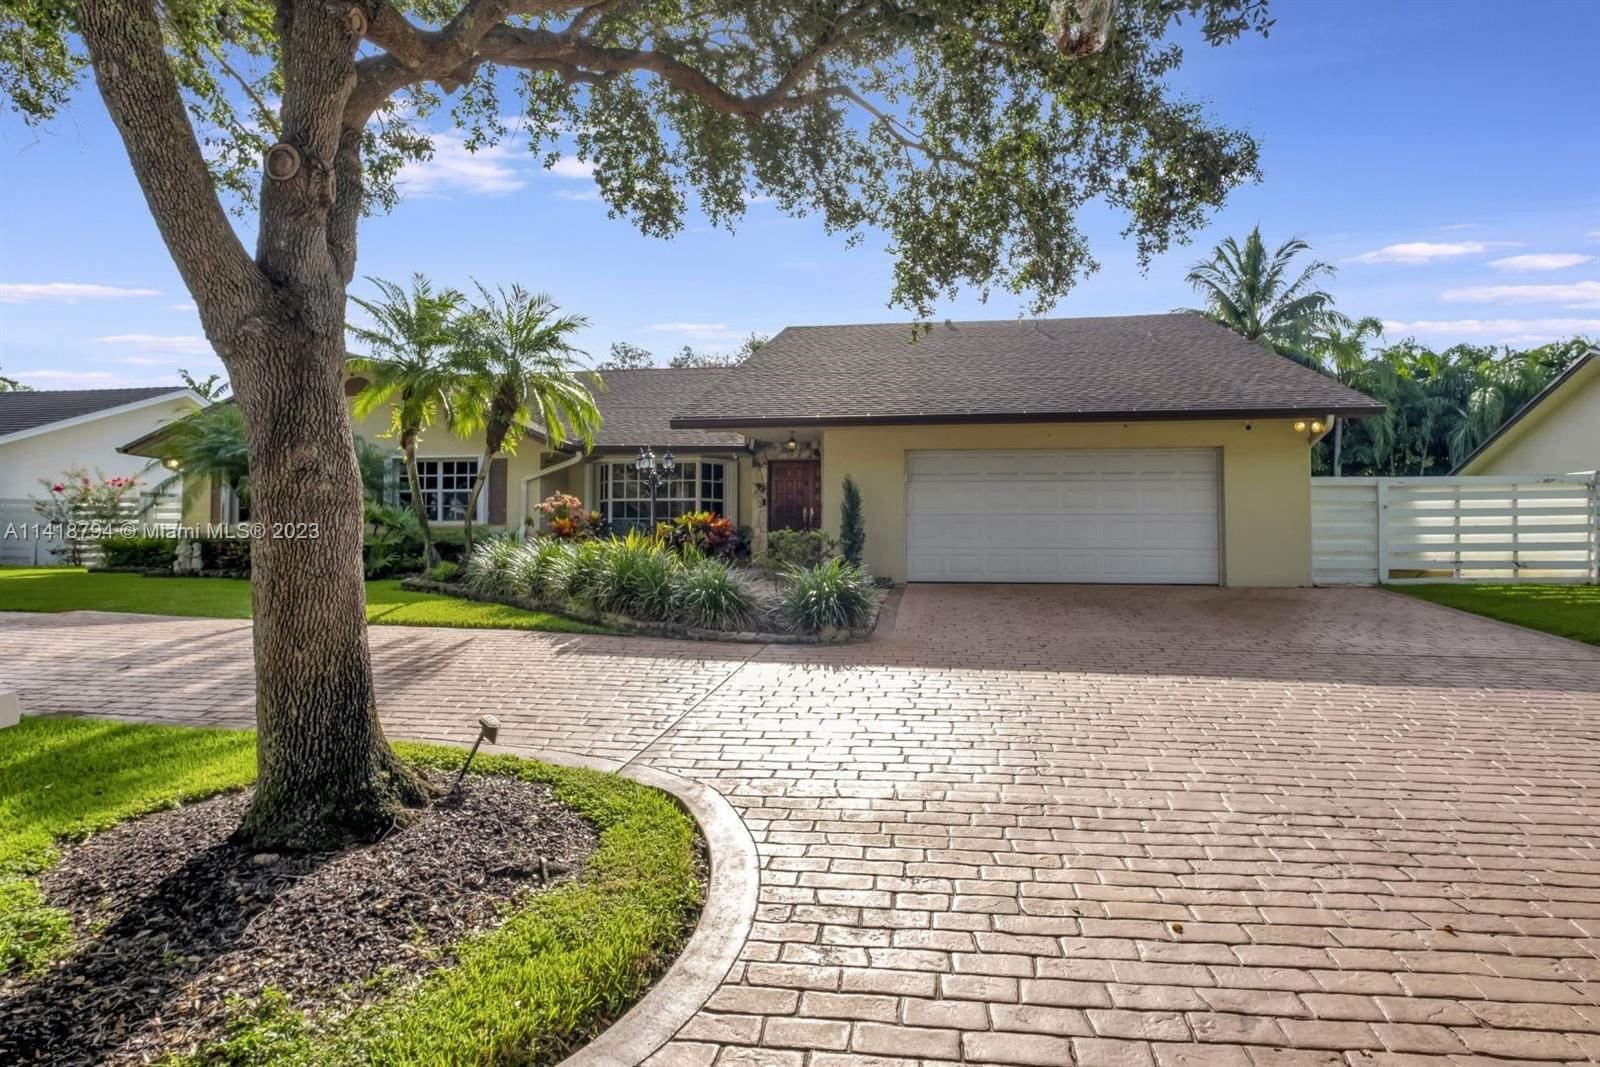 Real estate property located at 14727 153rd Ct, Miami-Dade County, Miami, FL